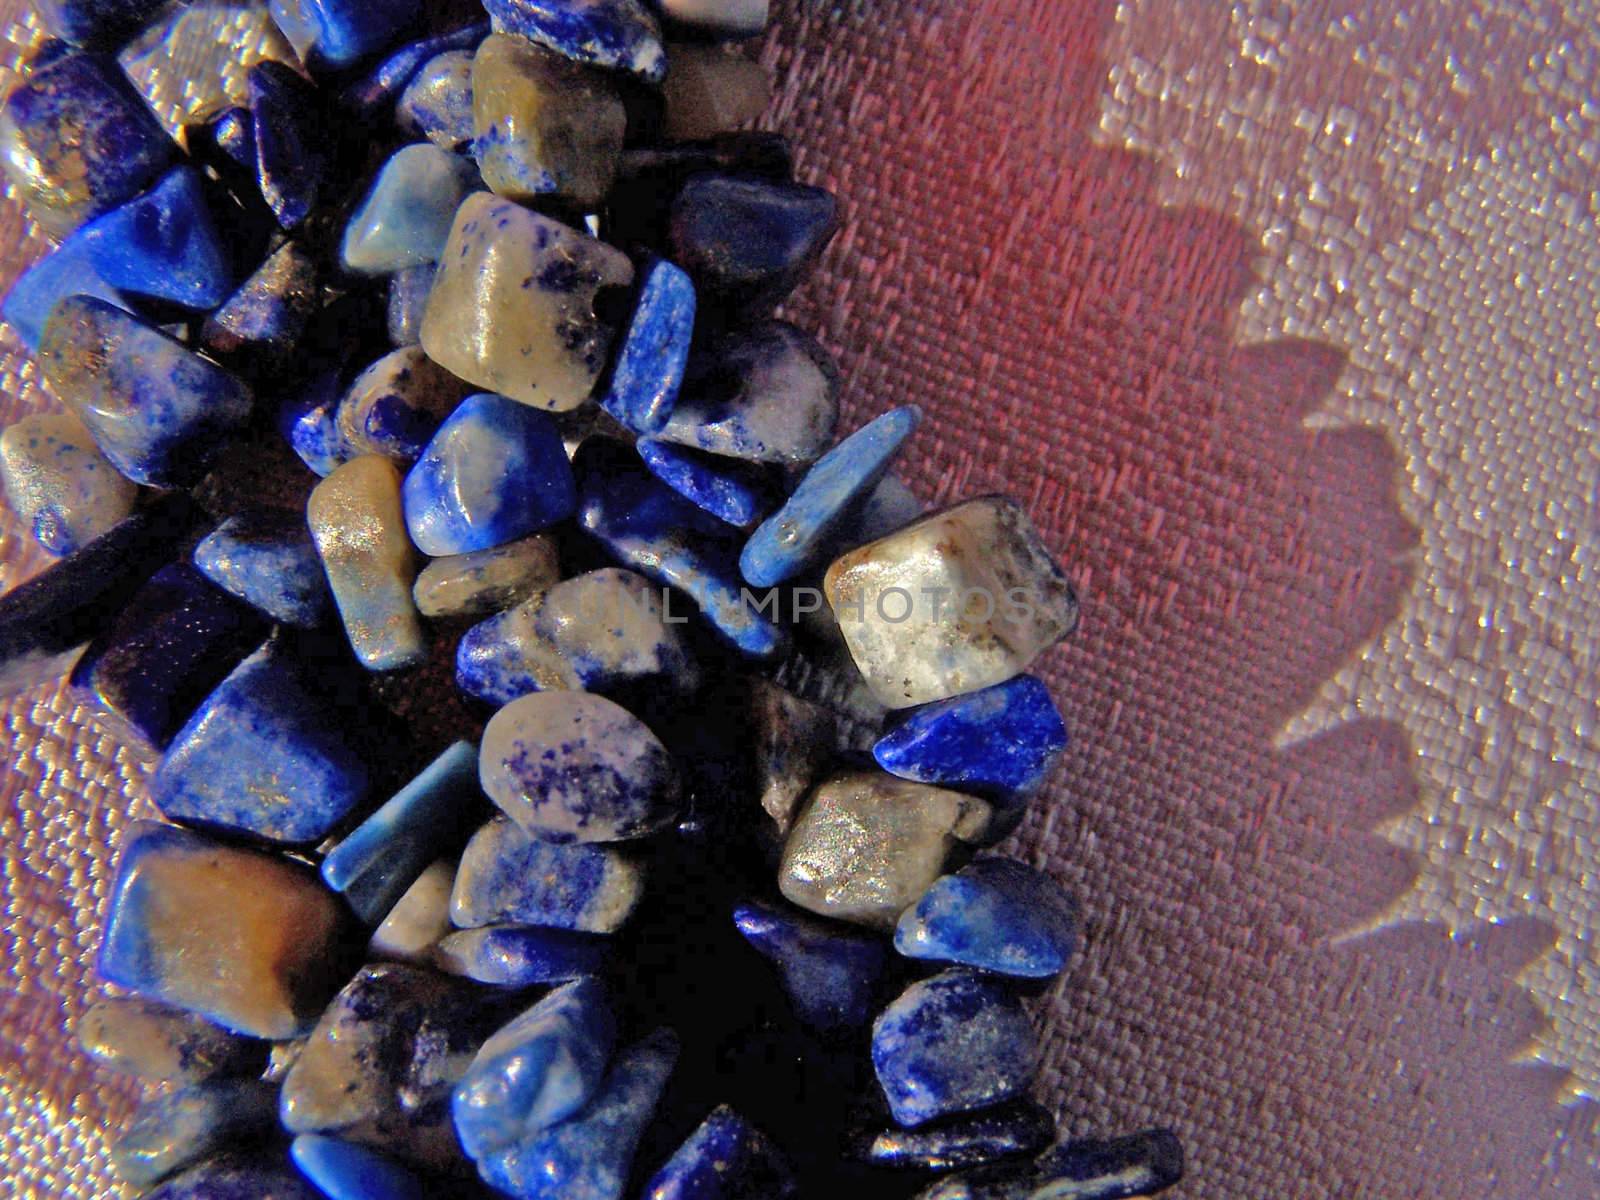 Lazurite preetty stone gems. Close up. Colorful.